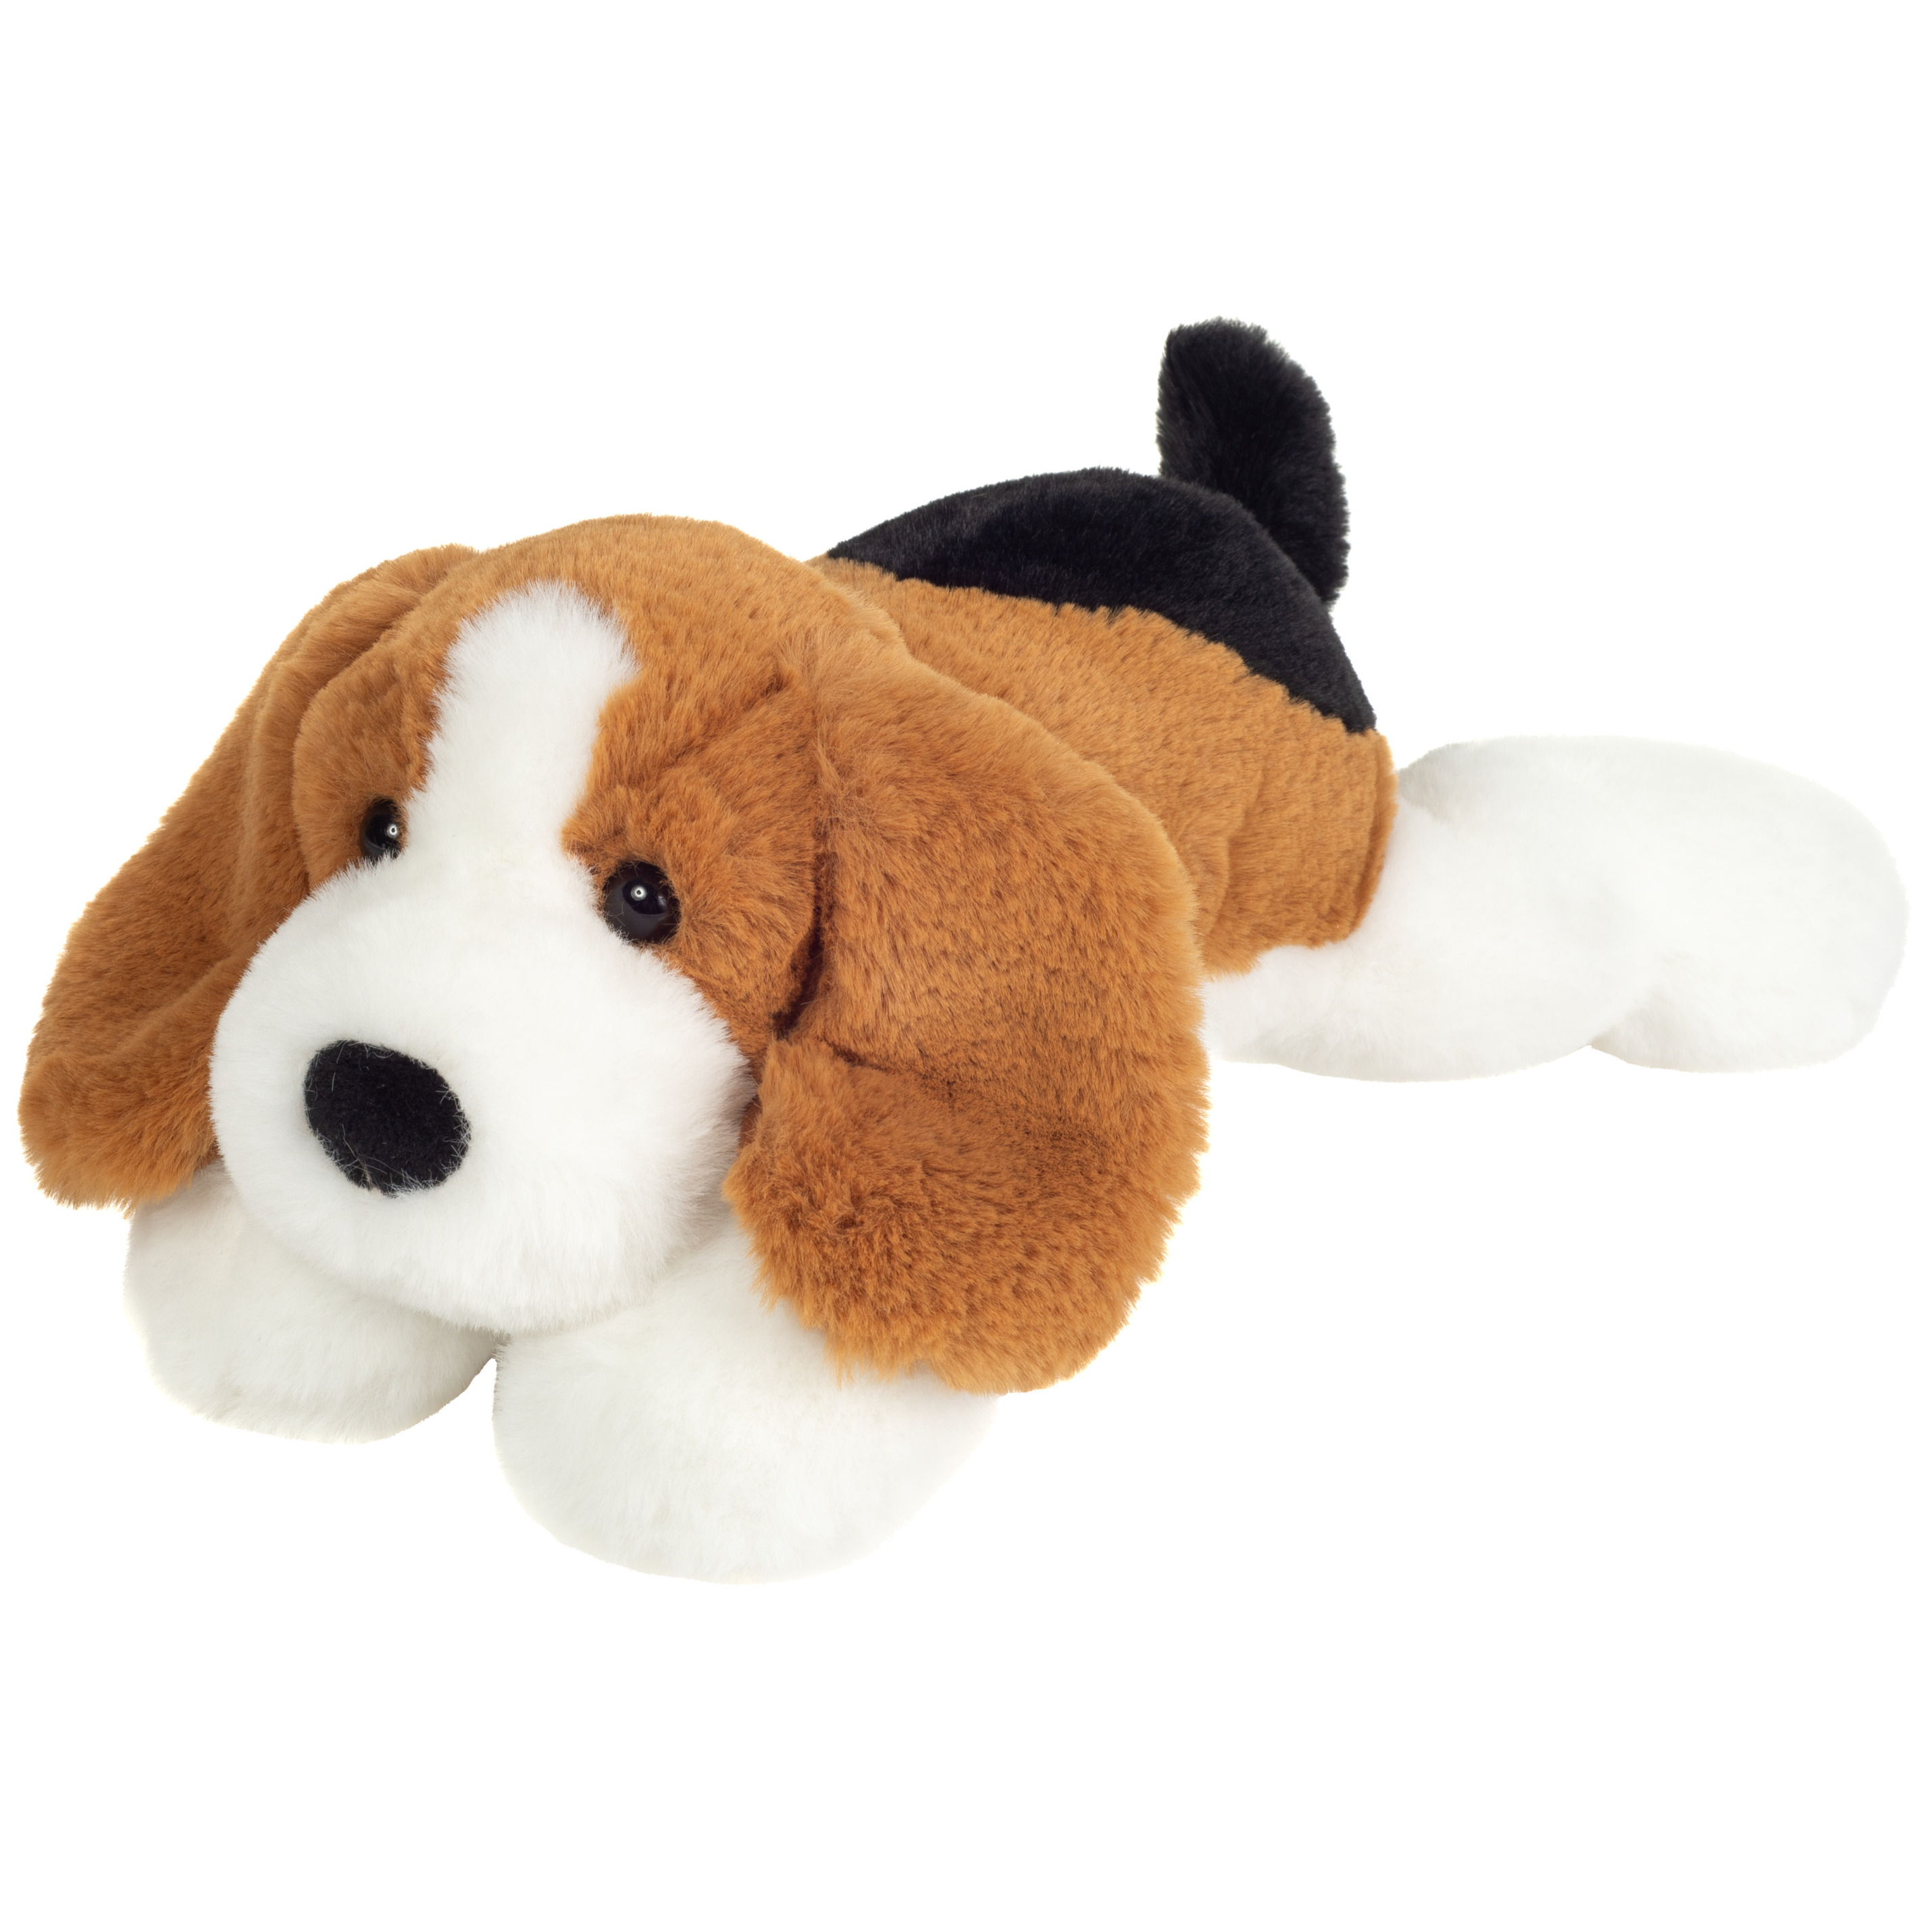 Hermann Teddy Knuffeldier hond Beagle pluche premium knuffels multi kleur 29 cm